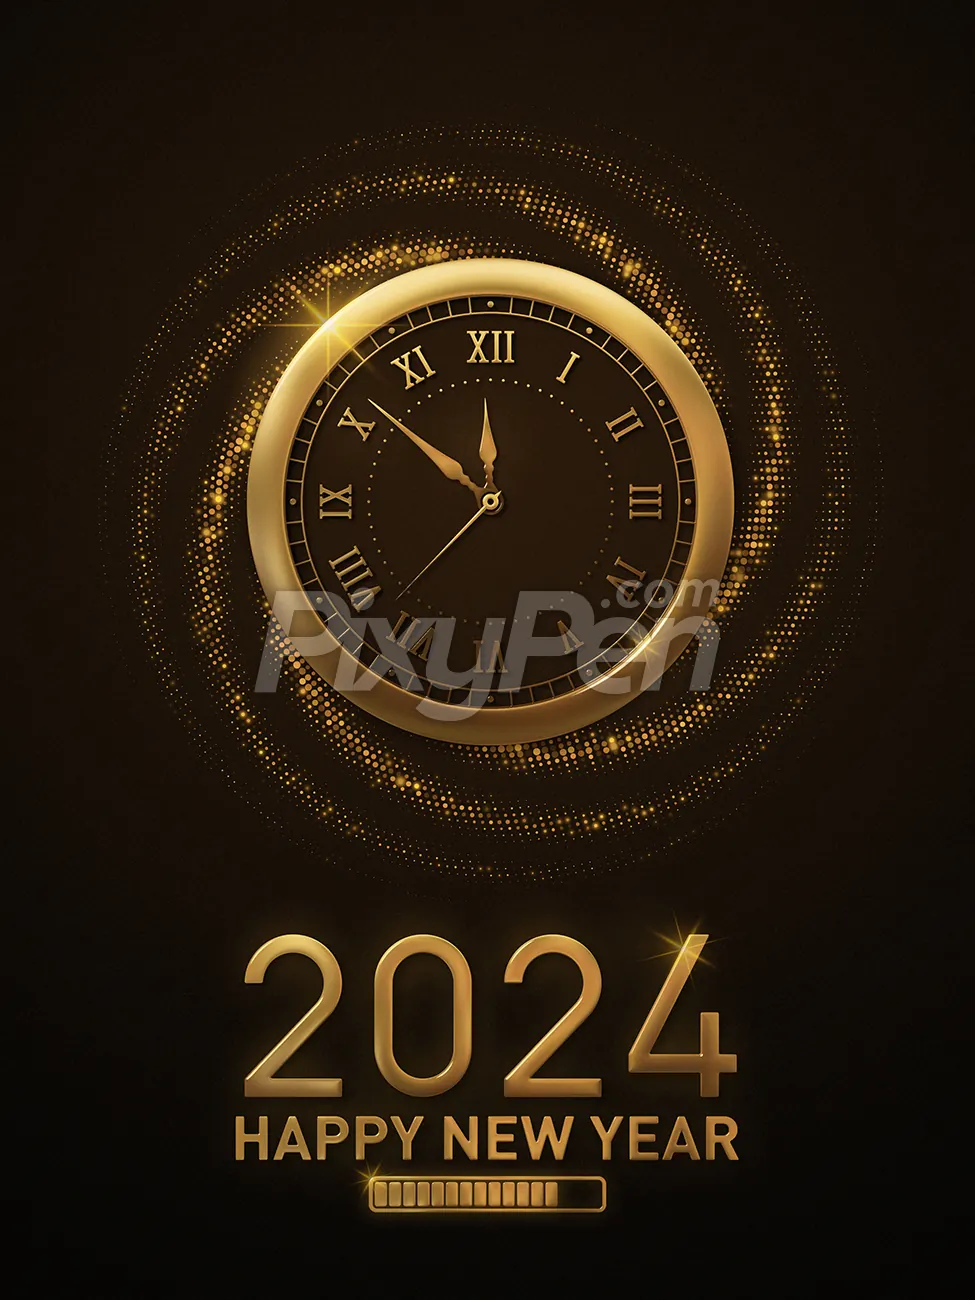 Happy New Year 2024 Countdown Loading Clock.webp